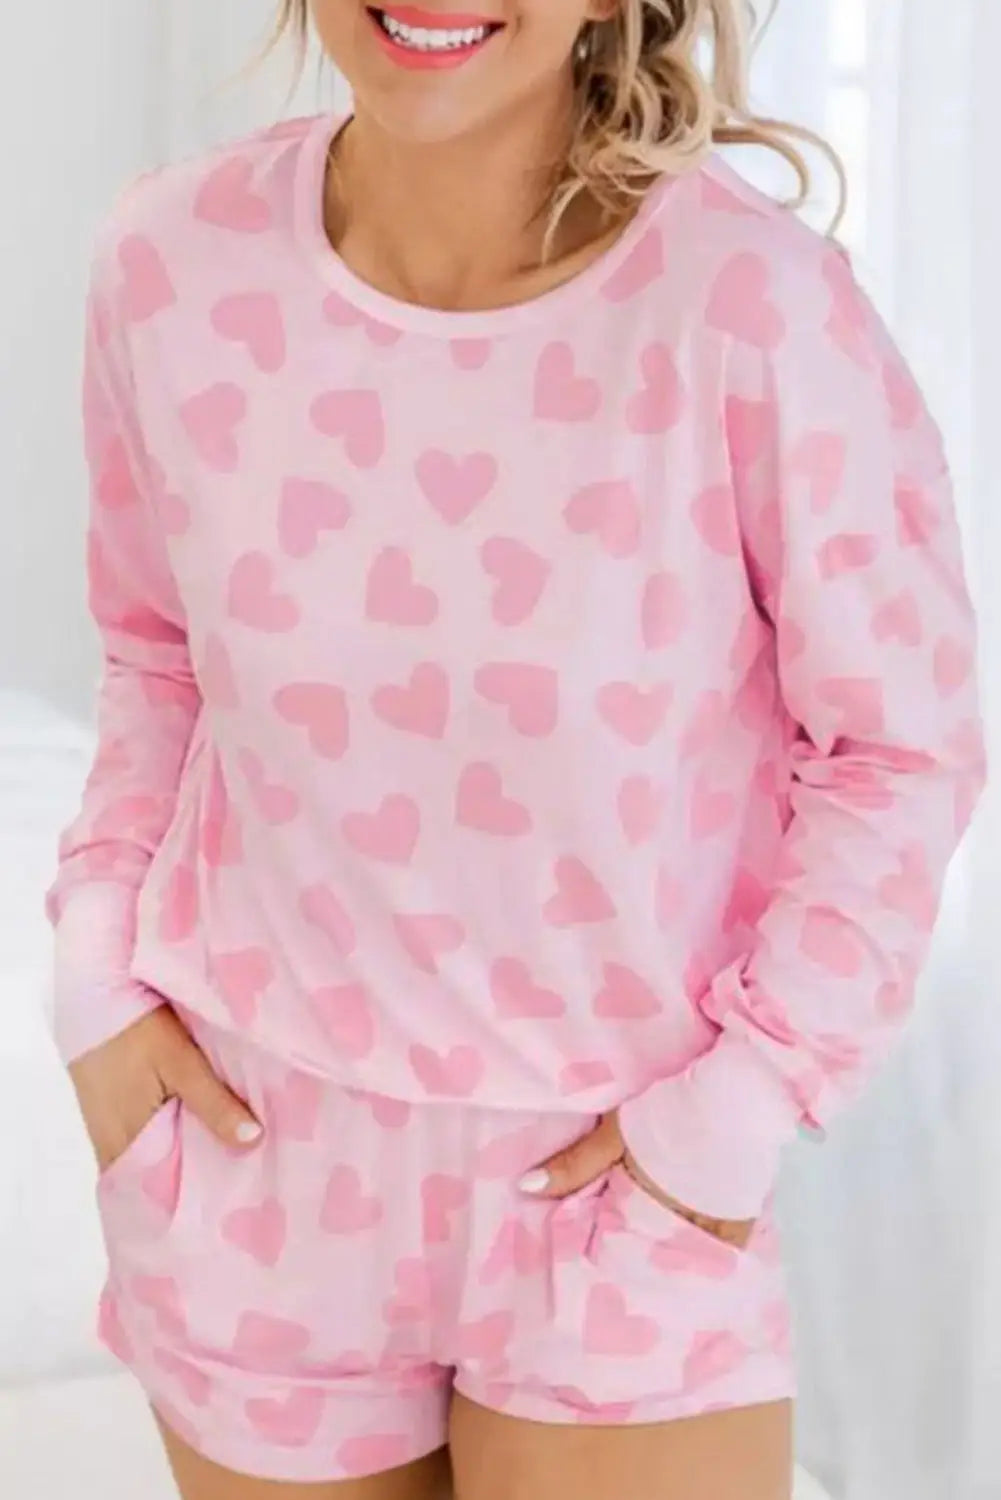 Black valentine heart shape print long sleeve top shorts lounge set - pink1 / s / 95% polyester + 5% elastane